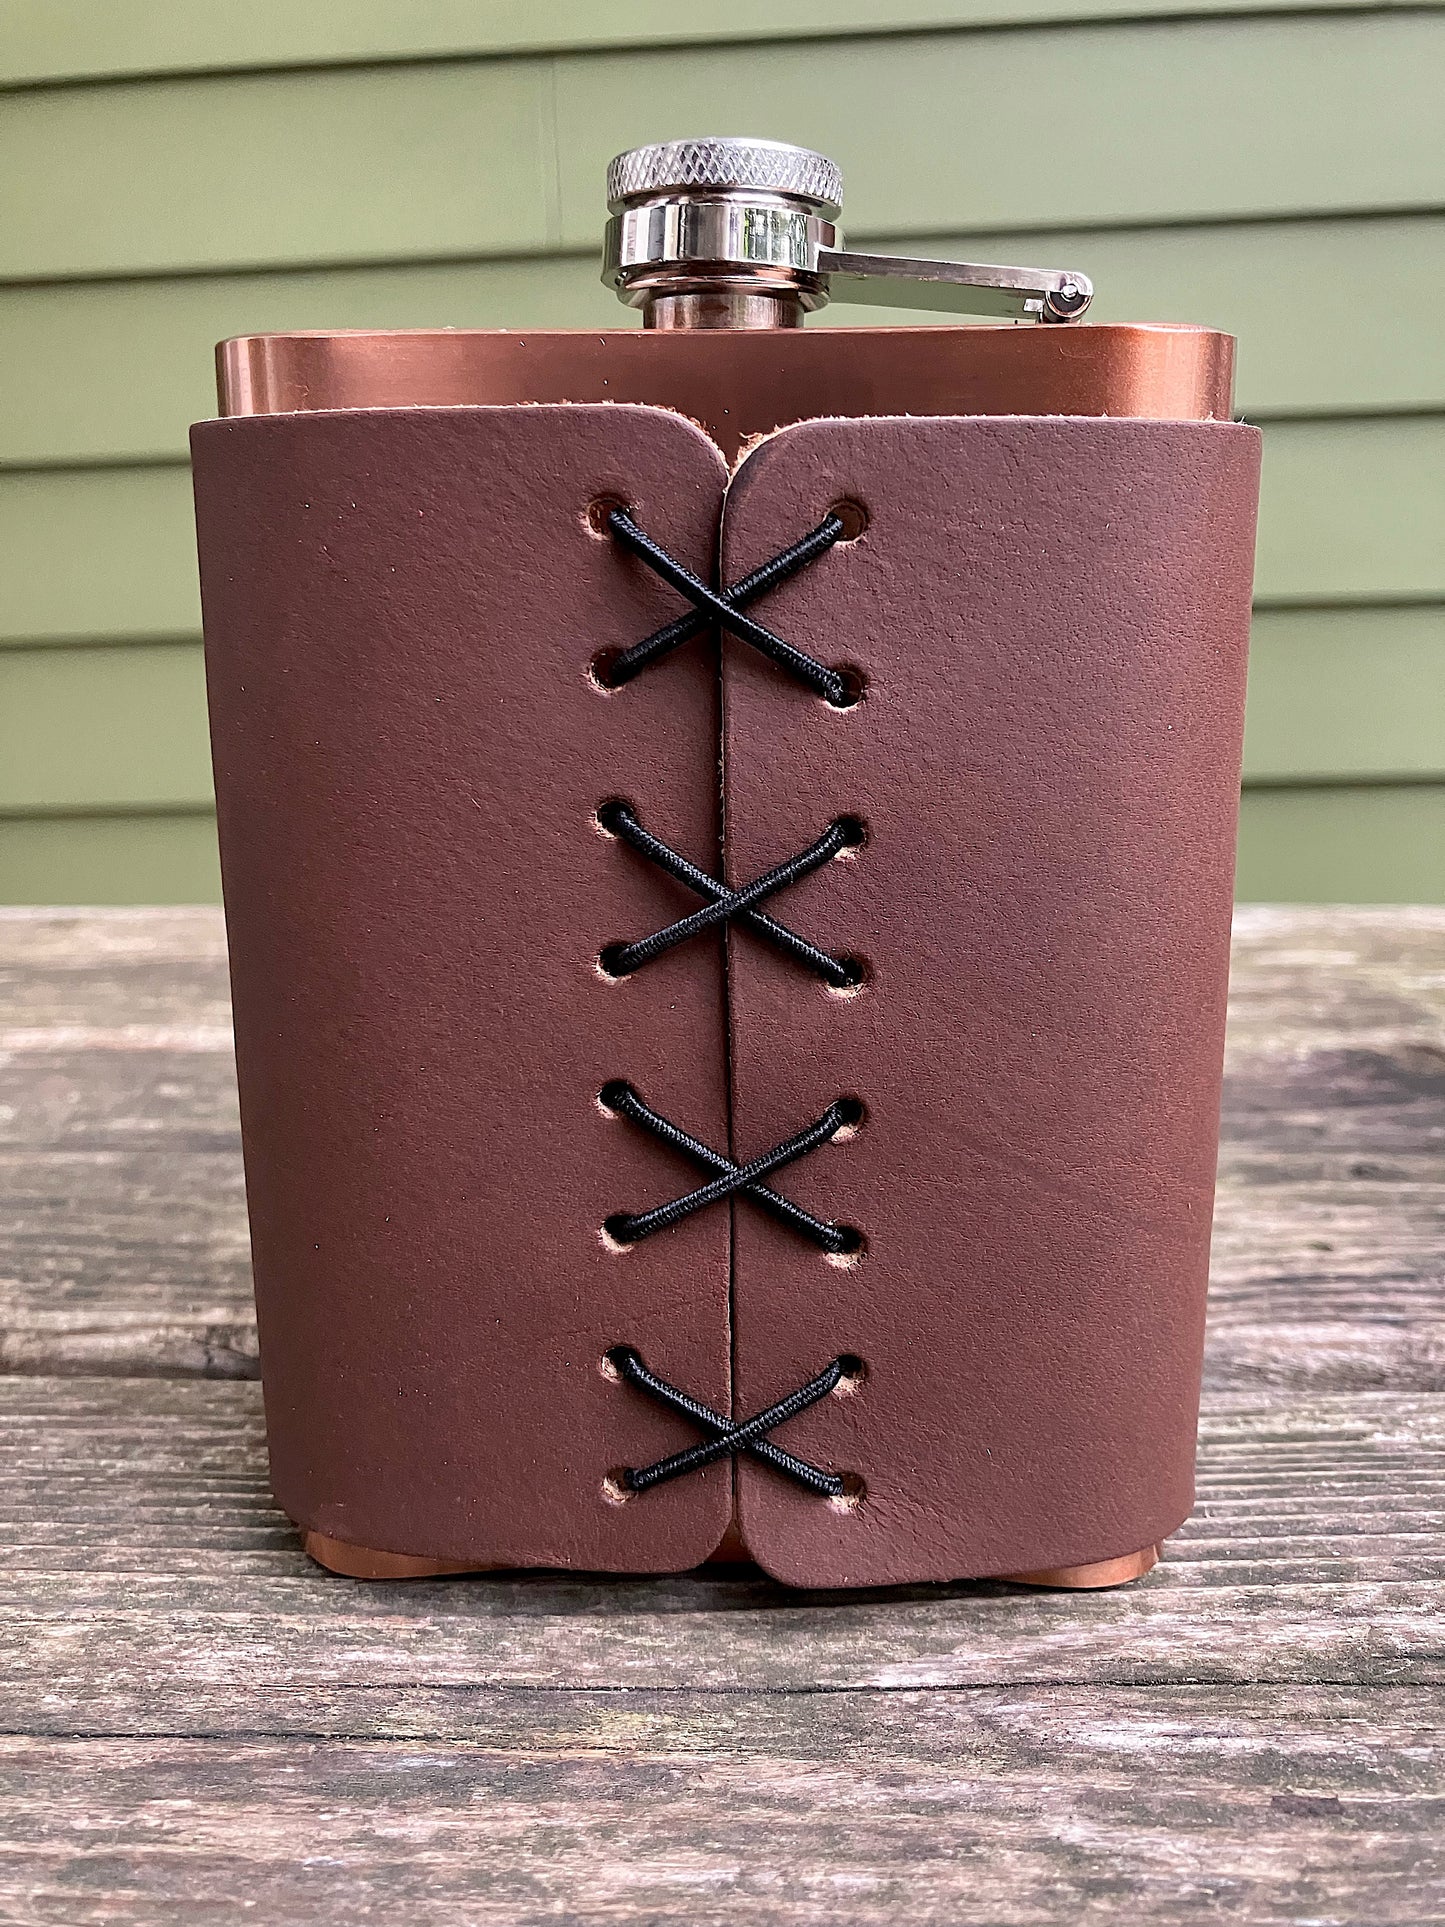 Leather Flask - Just Sayin'